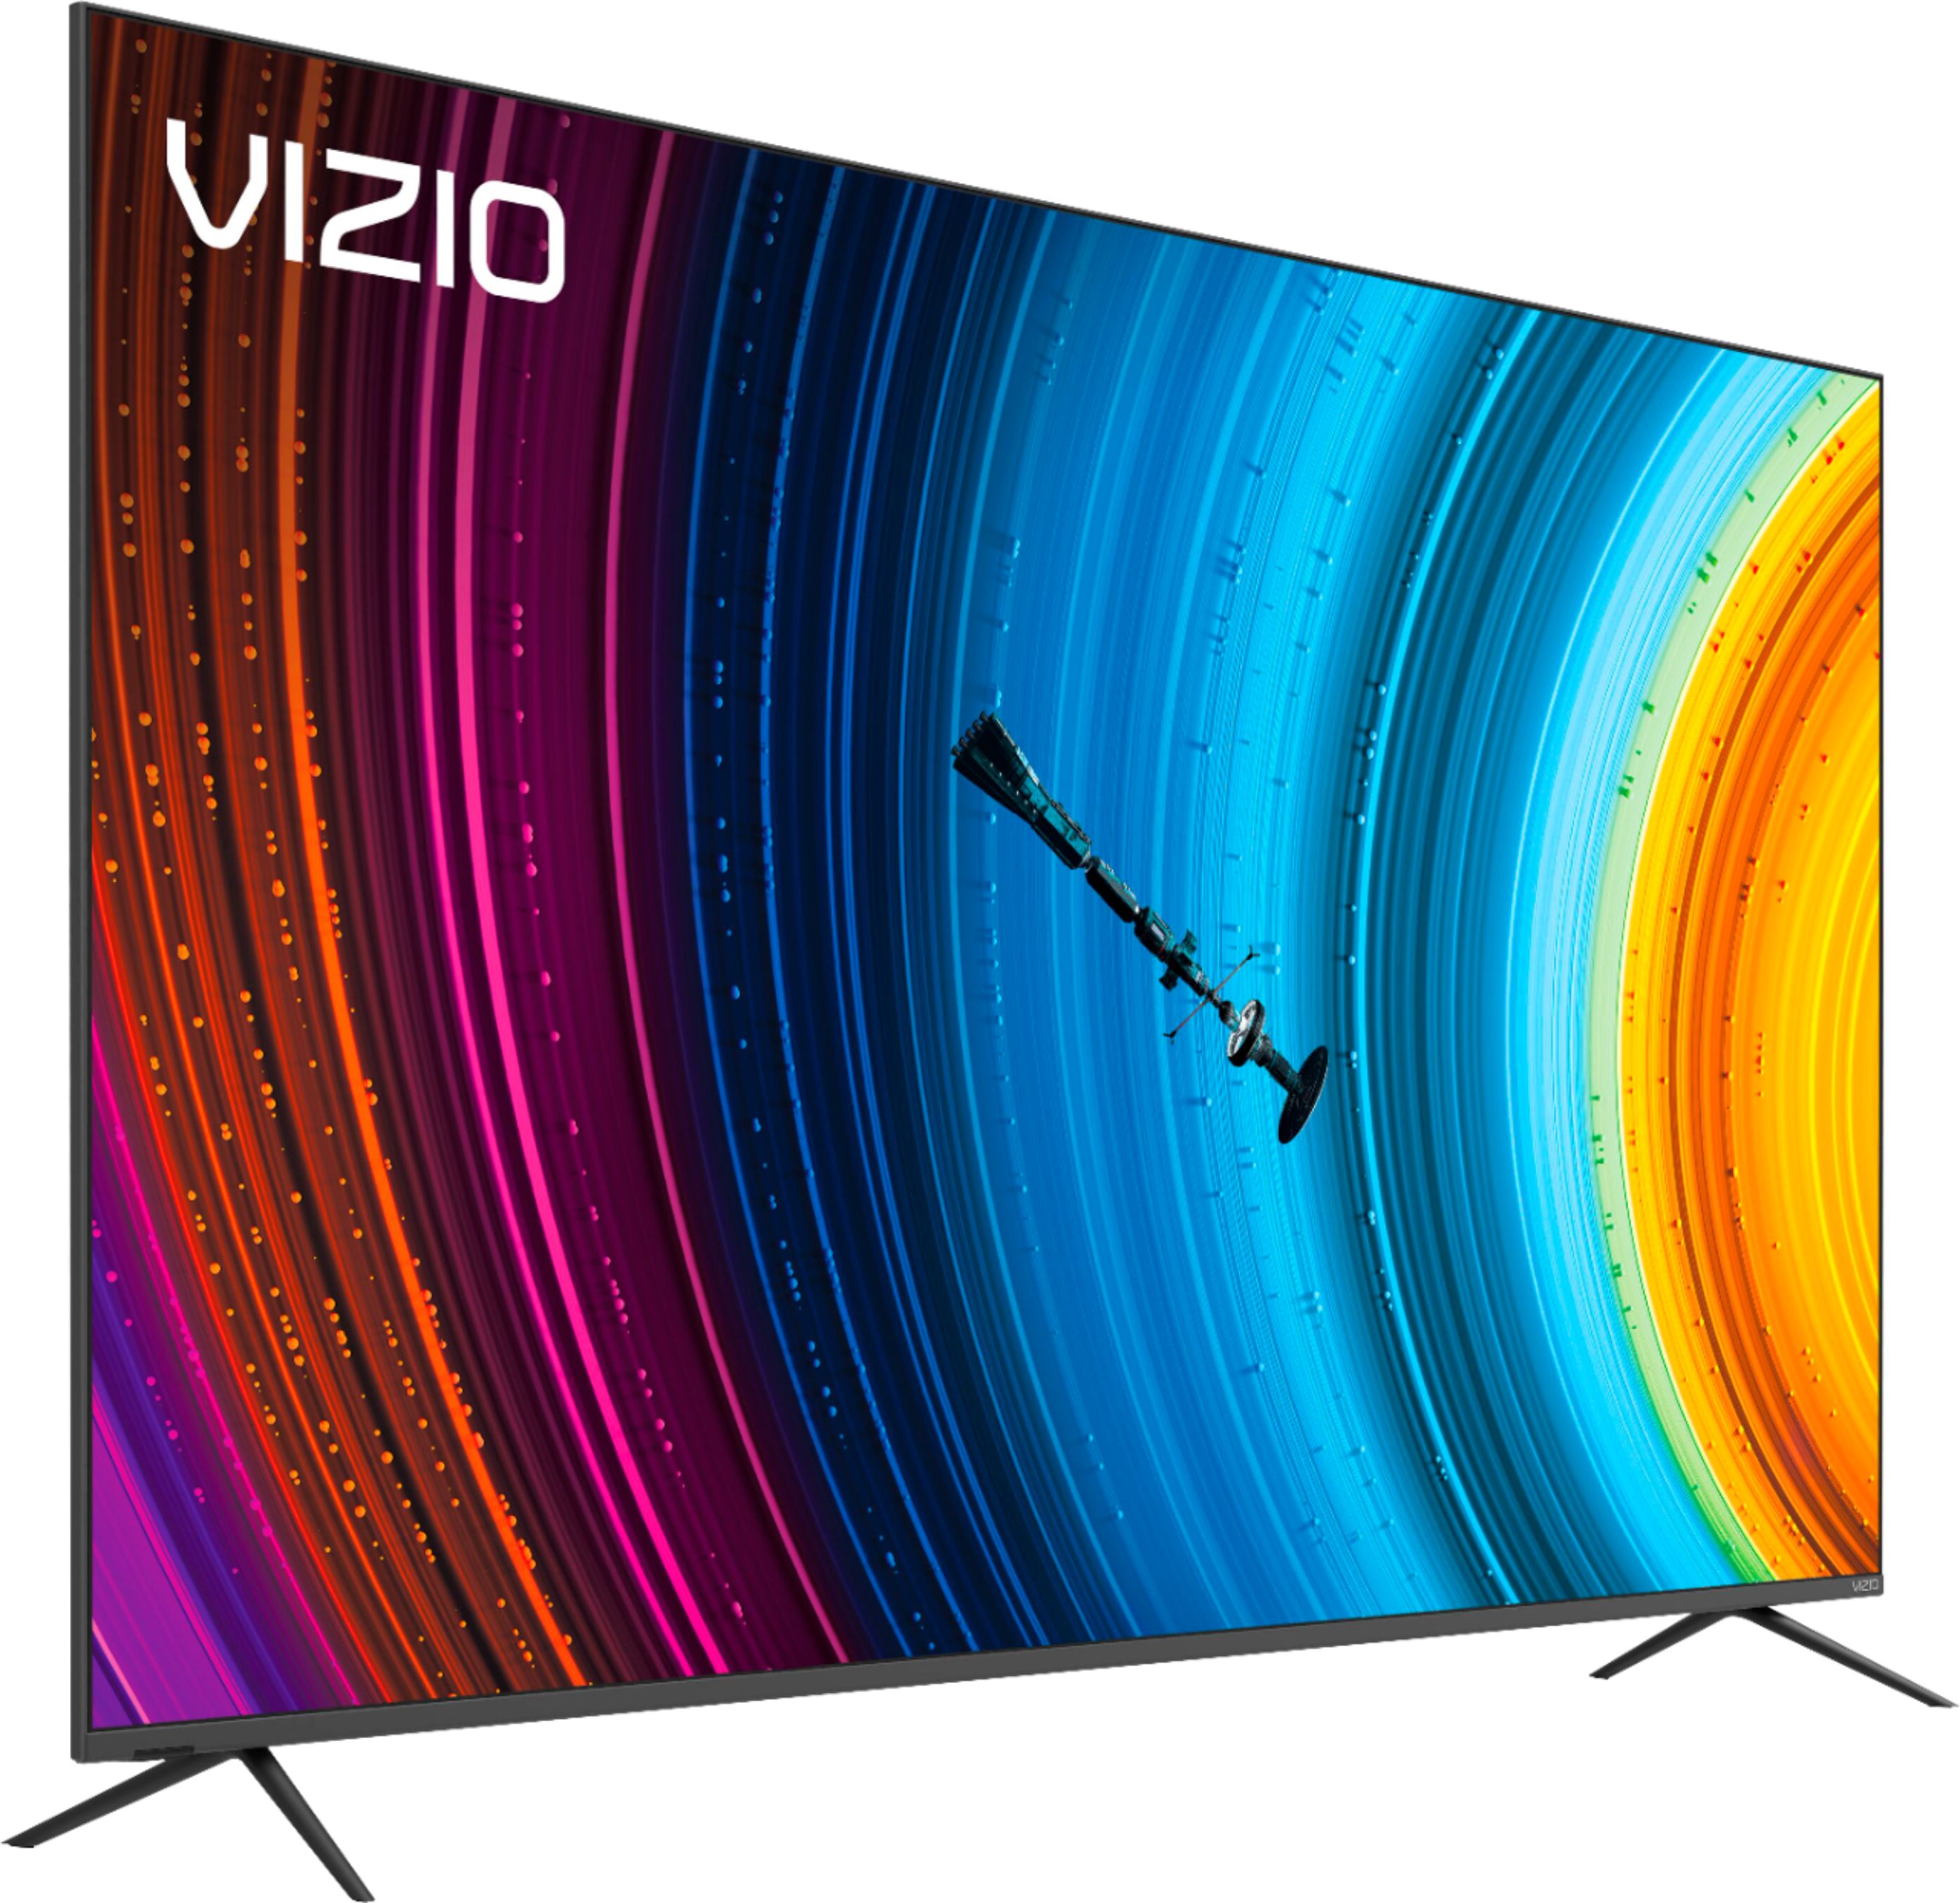 Angle View: VIZIO - 65" Class P-Series Quantum Series LED 4K UHD SmartCast TV